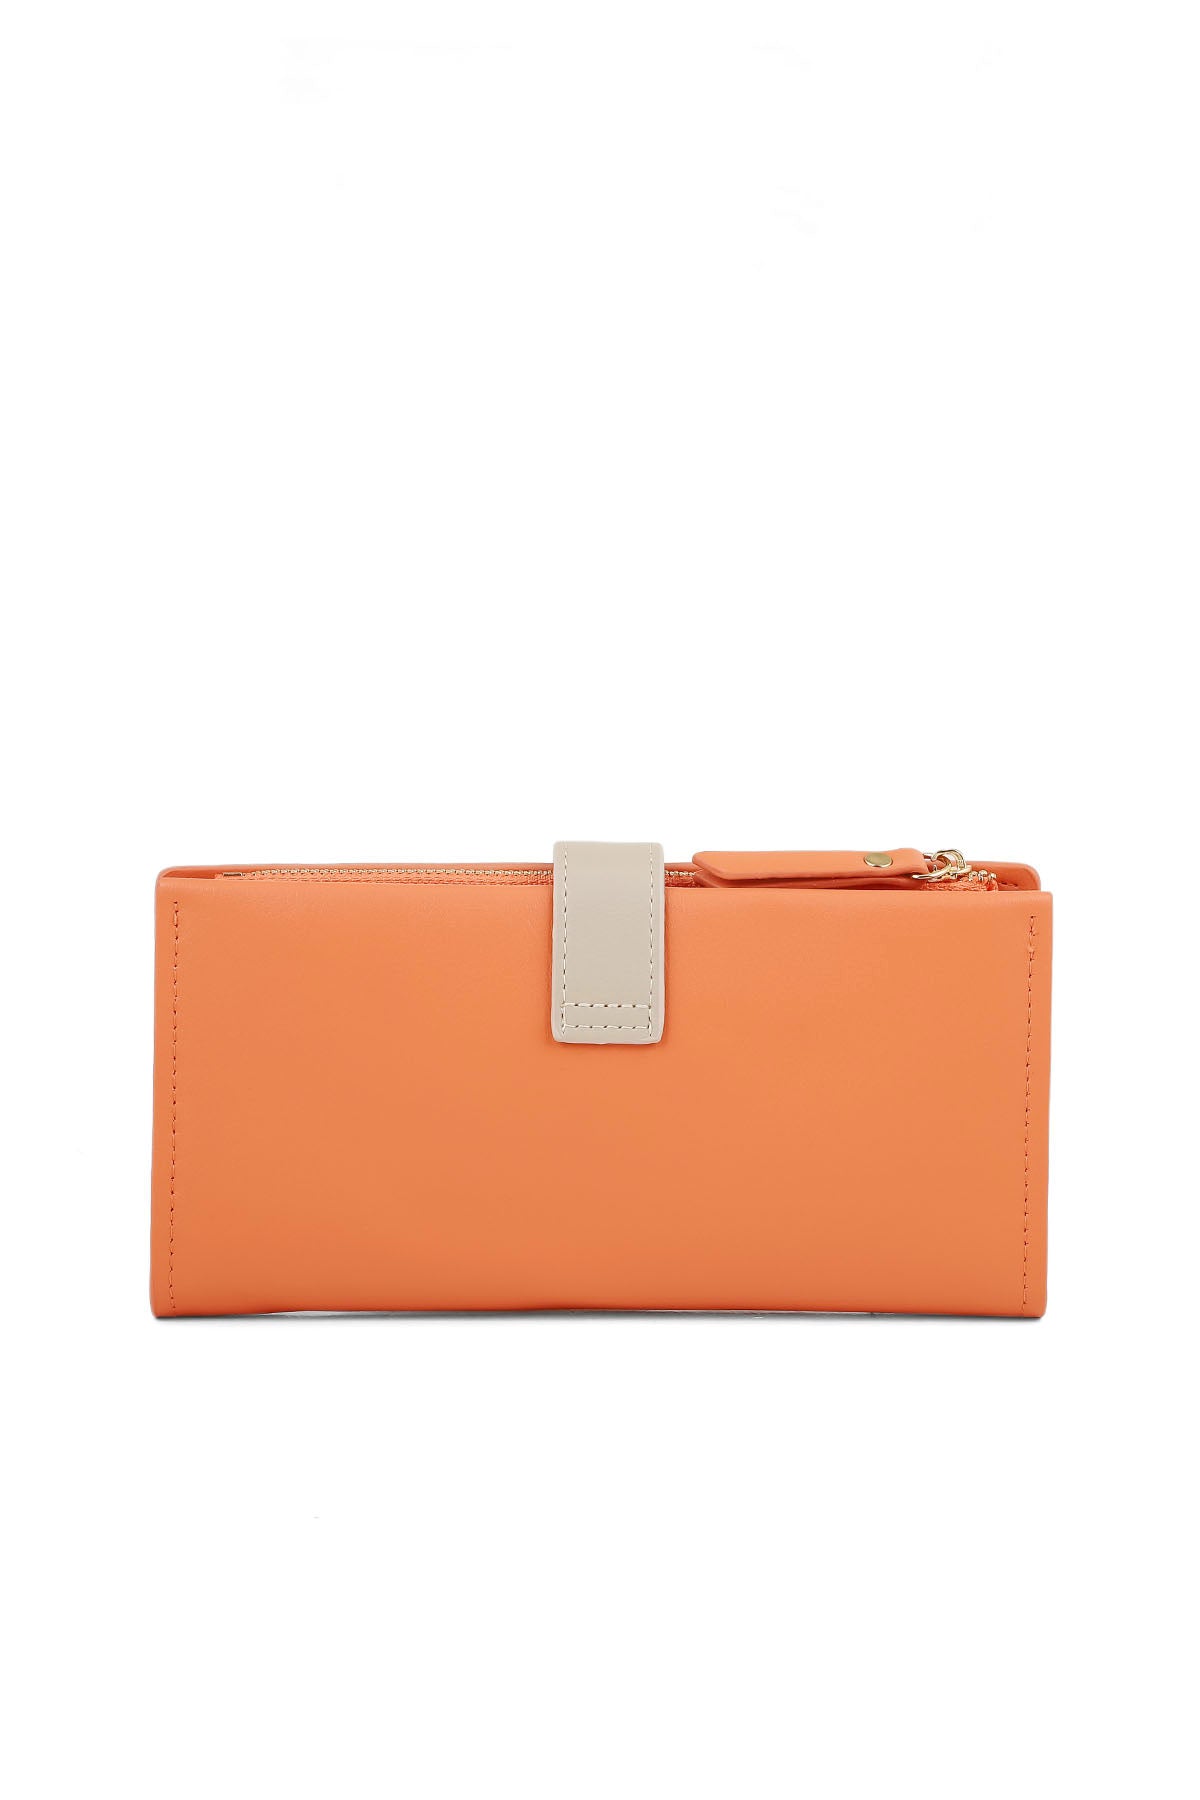 Wristlet Wallet B26046-Orange